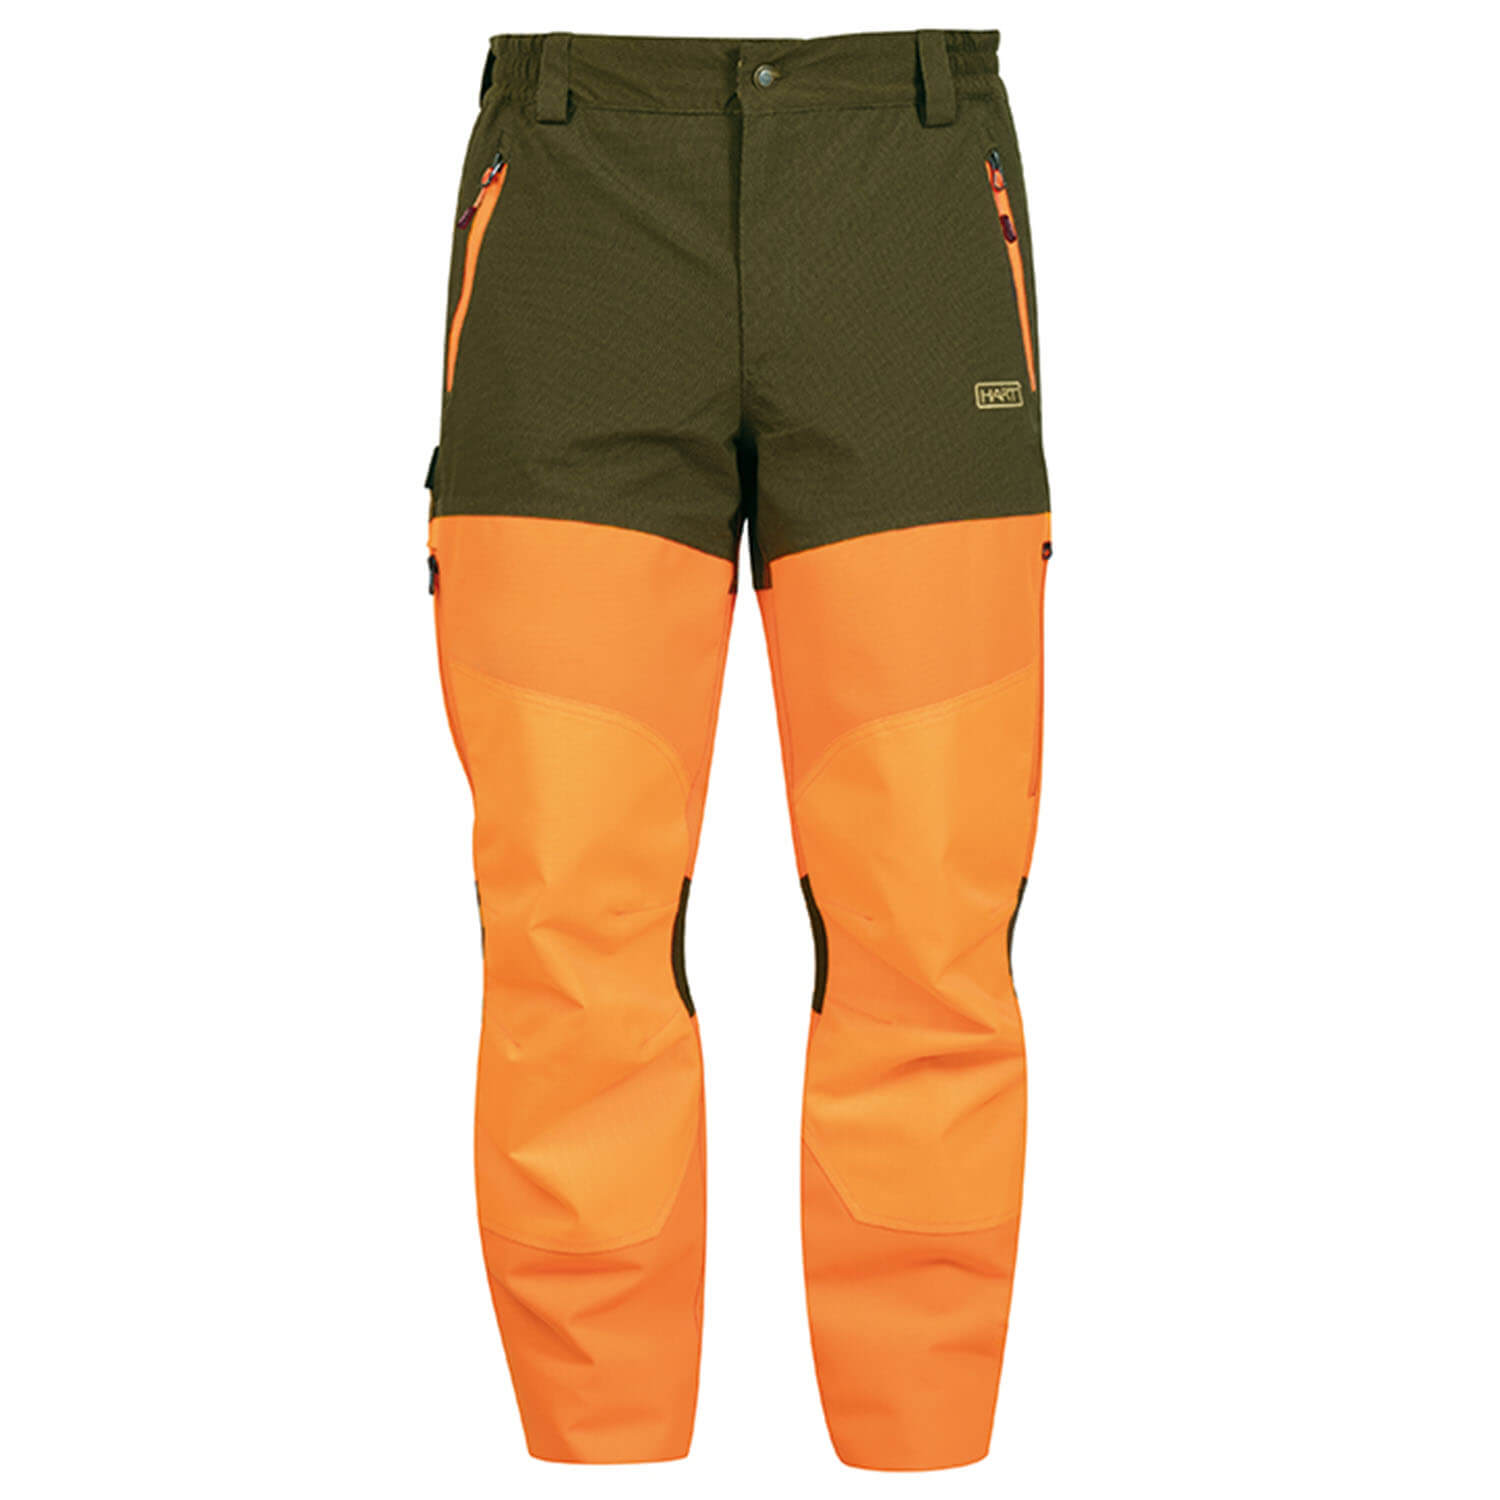 Hart hunting trousers Wildpro-T (blaze)